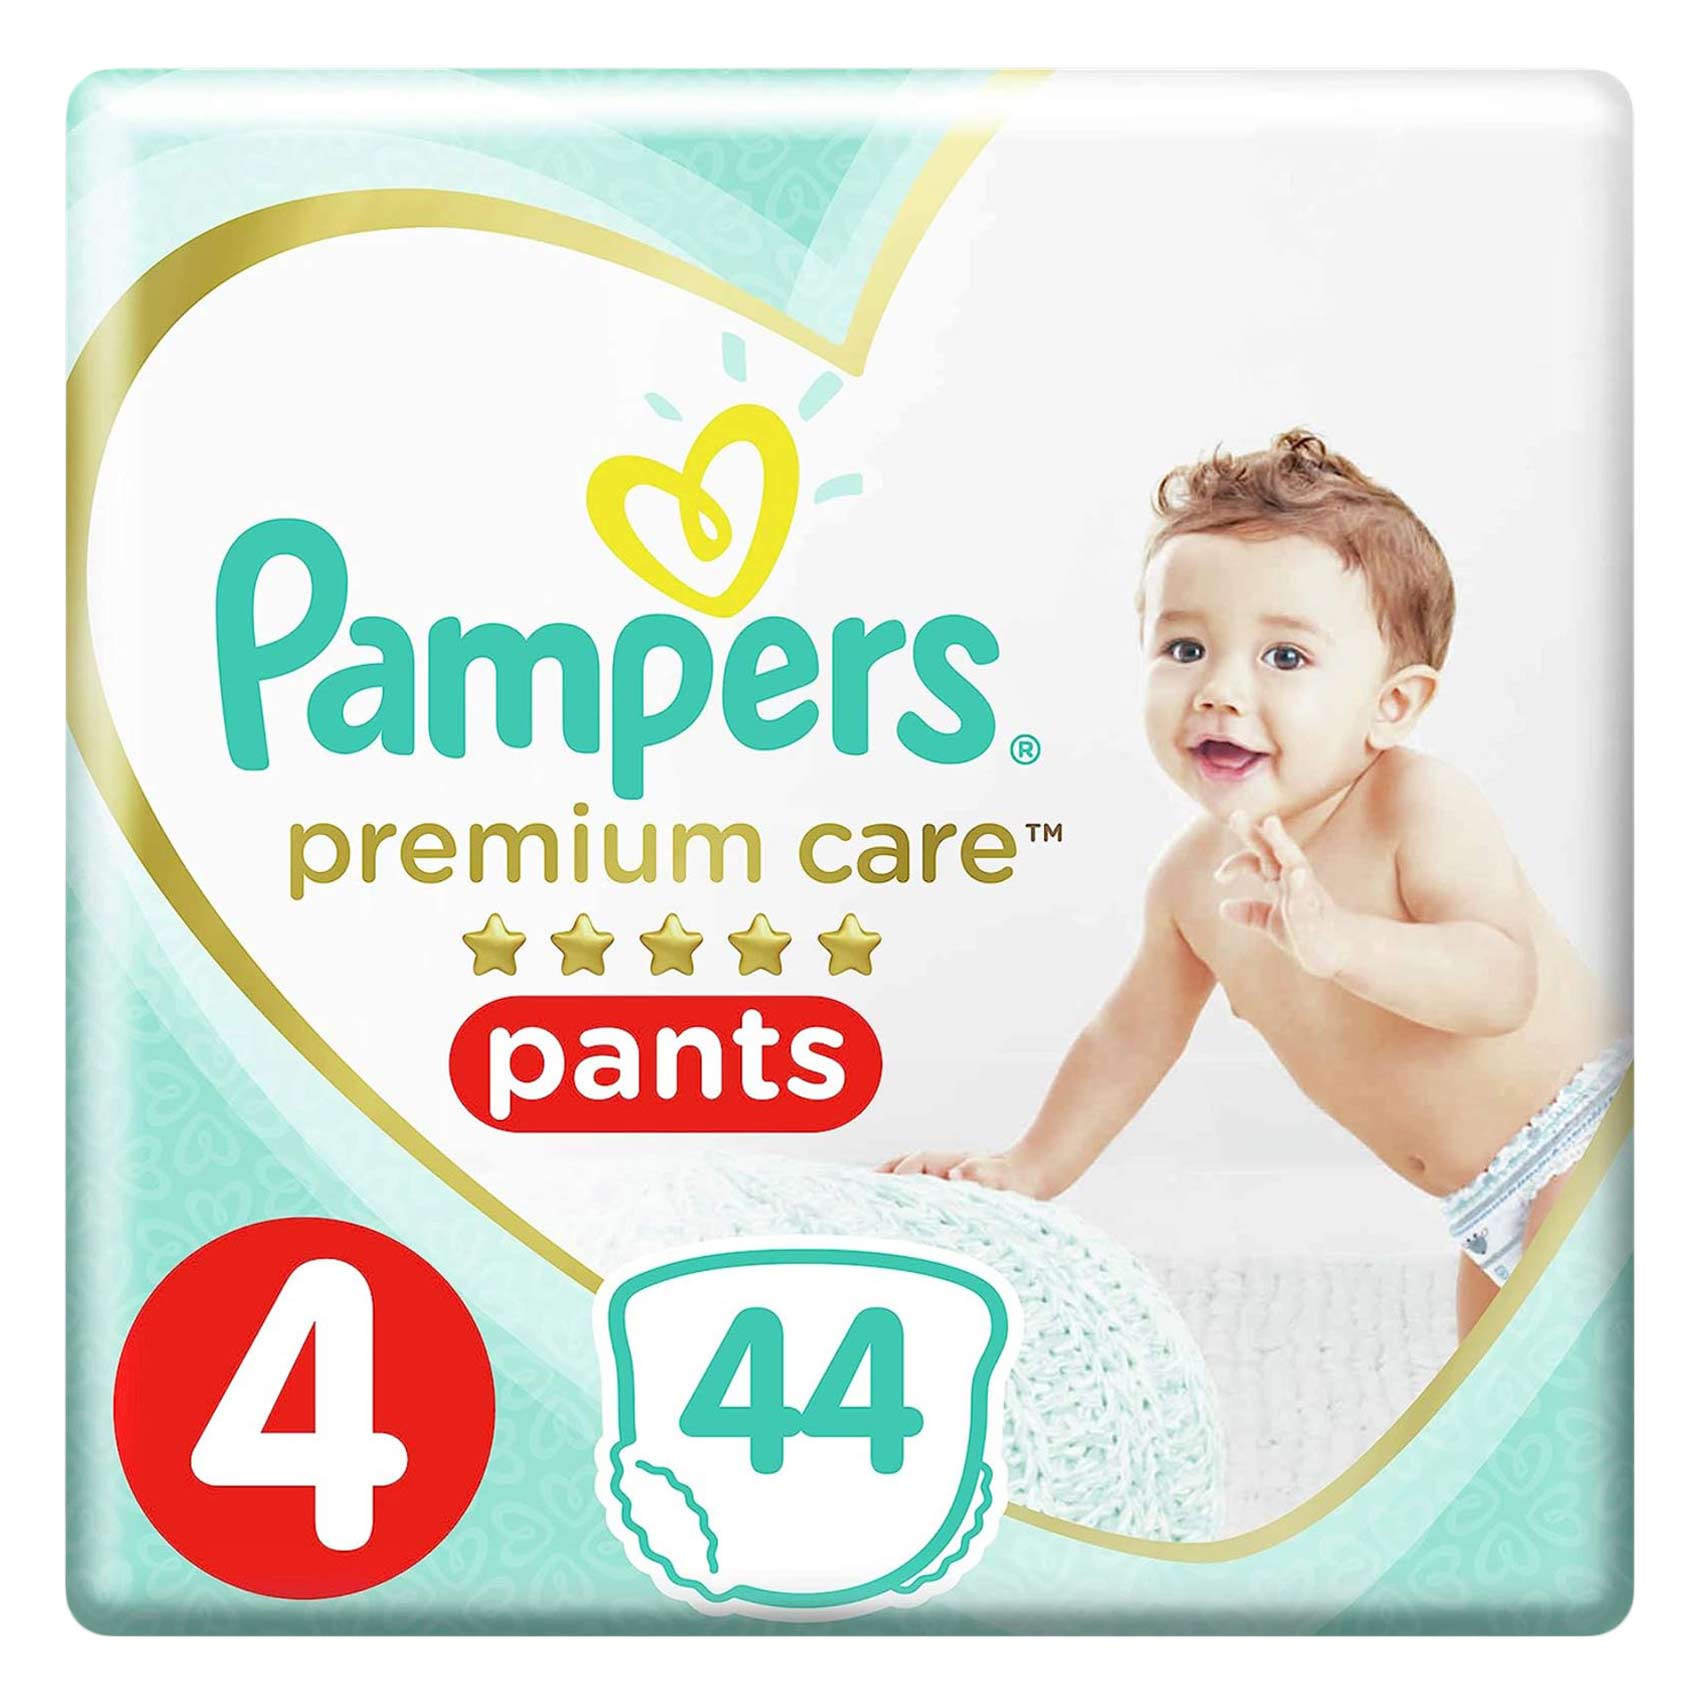 Pampers Pants Premium Care Diaper Maxi Size 4 44 Count 9-14 kg